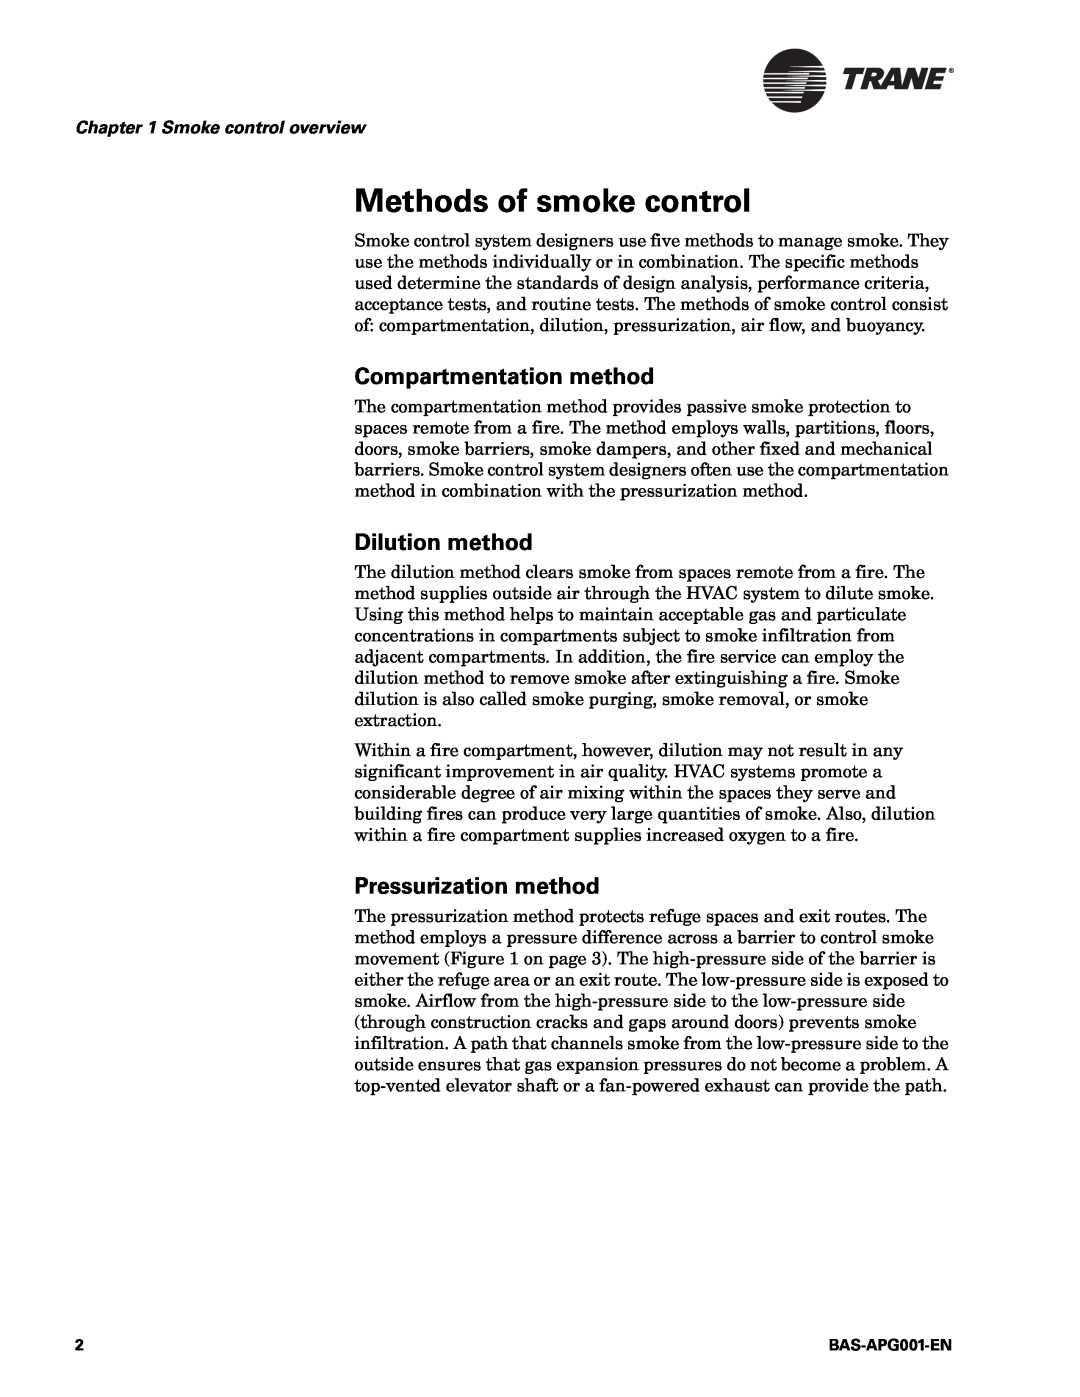 Trane BAS-APG001-EN manual Methods of smoke control, Compartmentation method, Dilution method, Pressurization method 